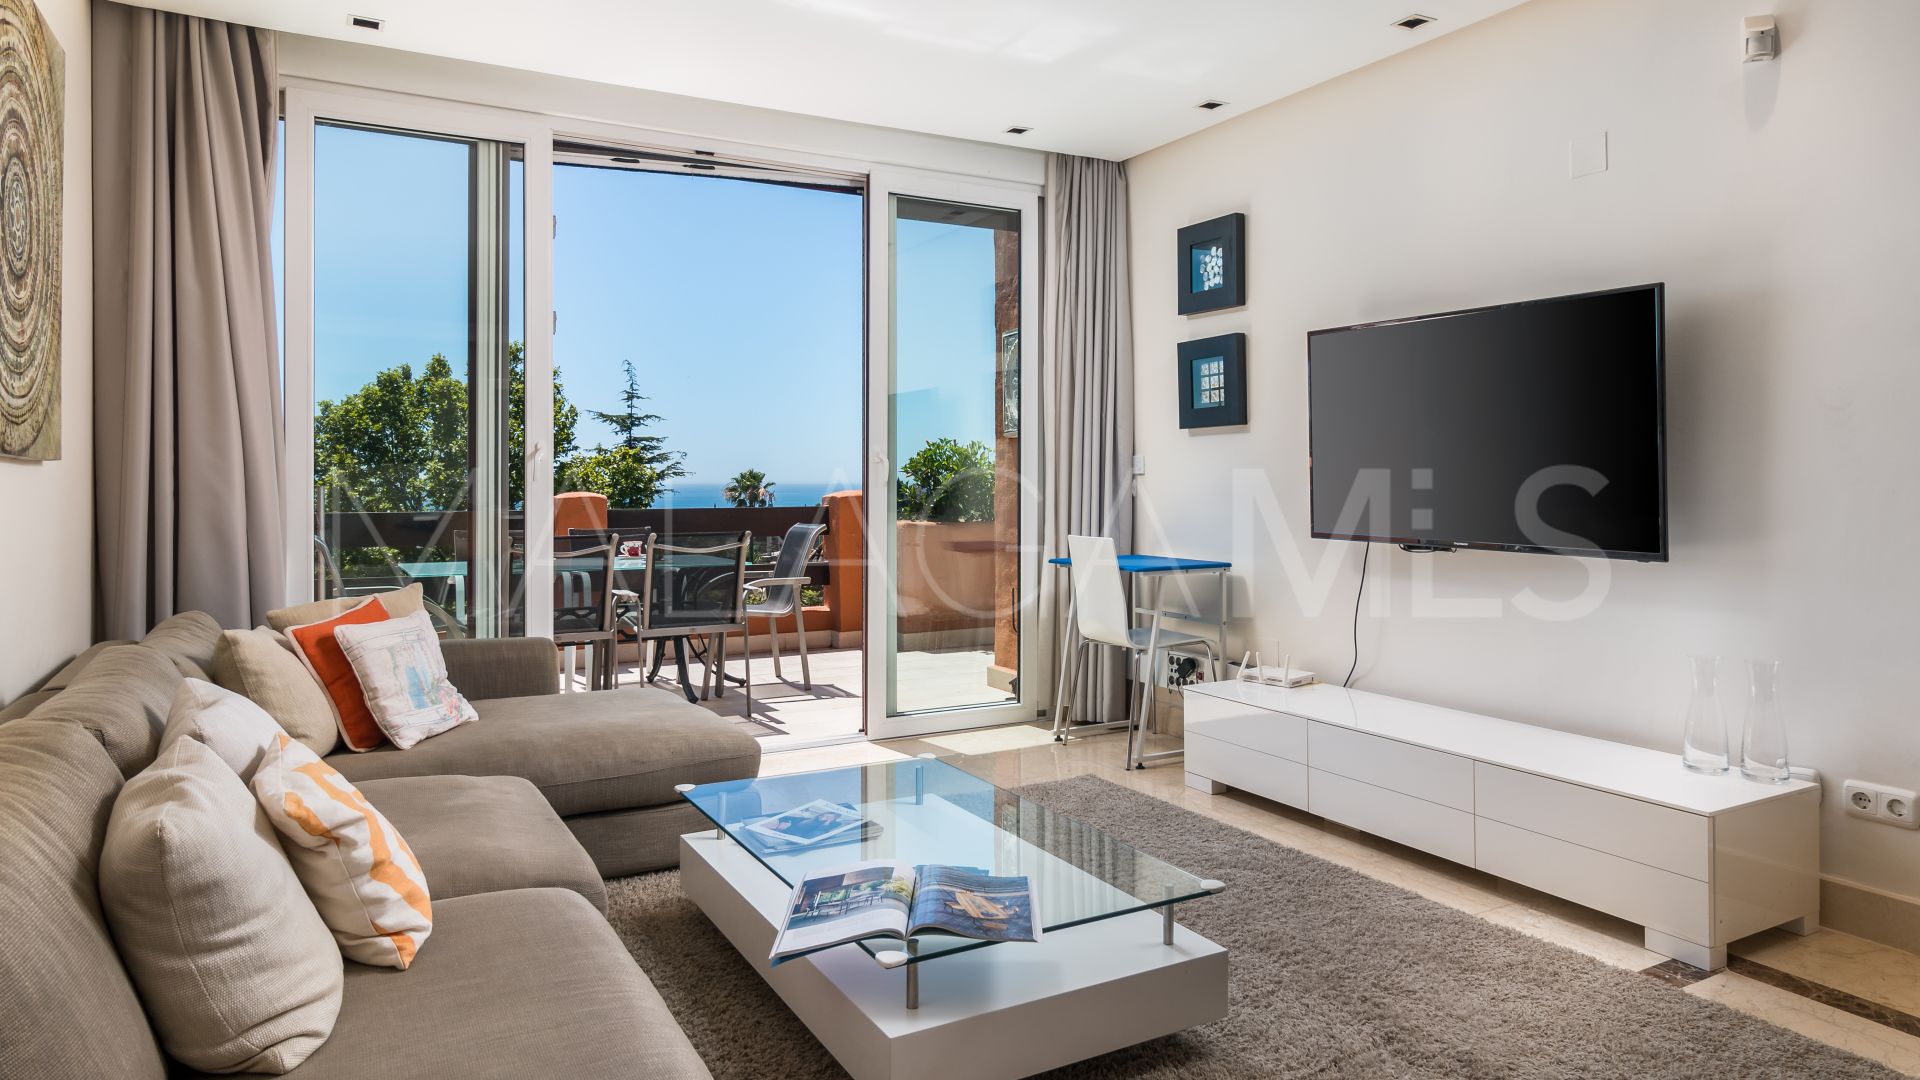 La Alzambra duplex penthouse for sale